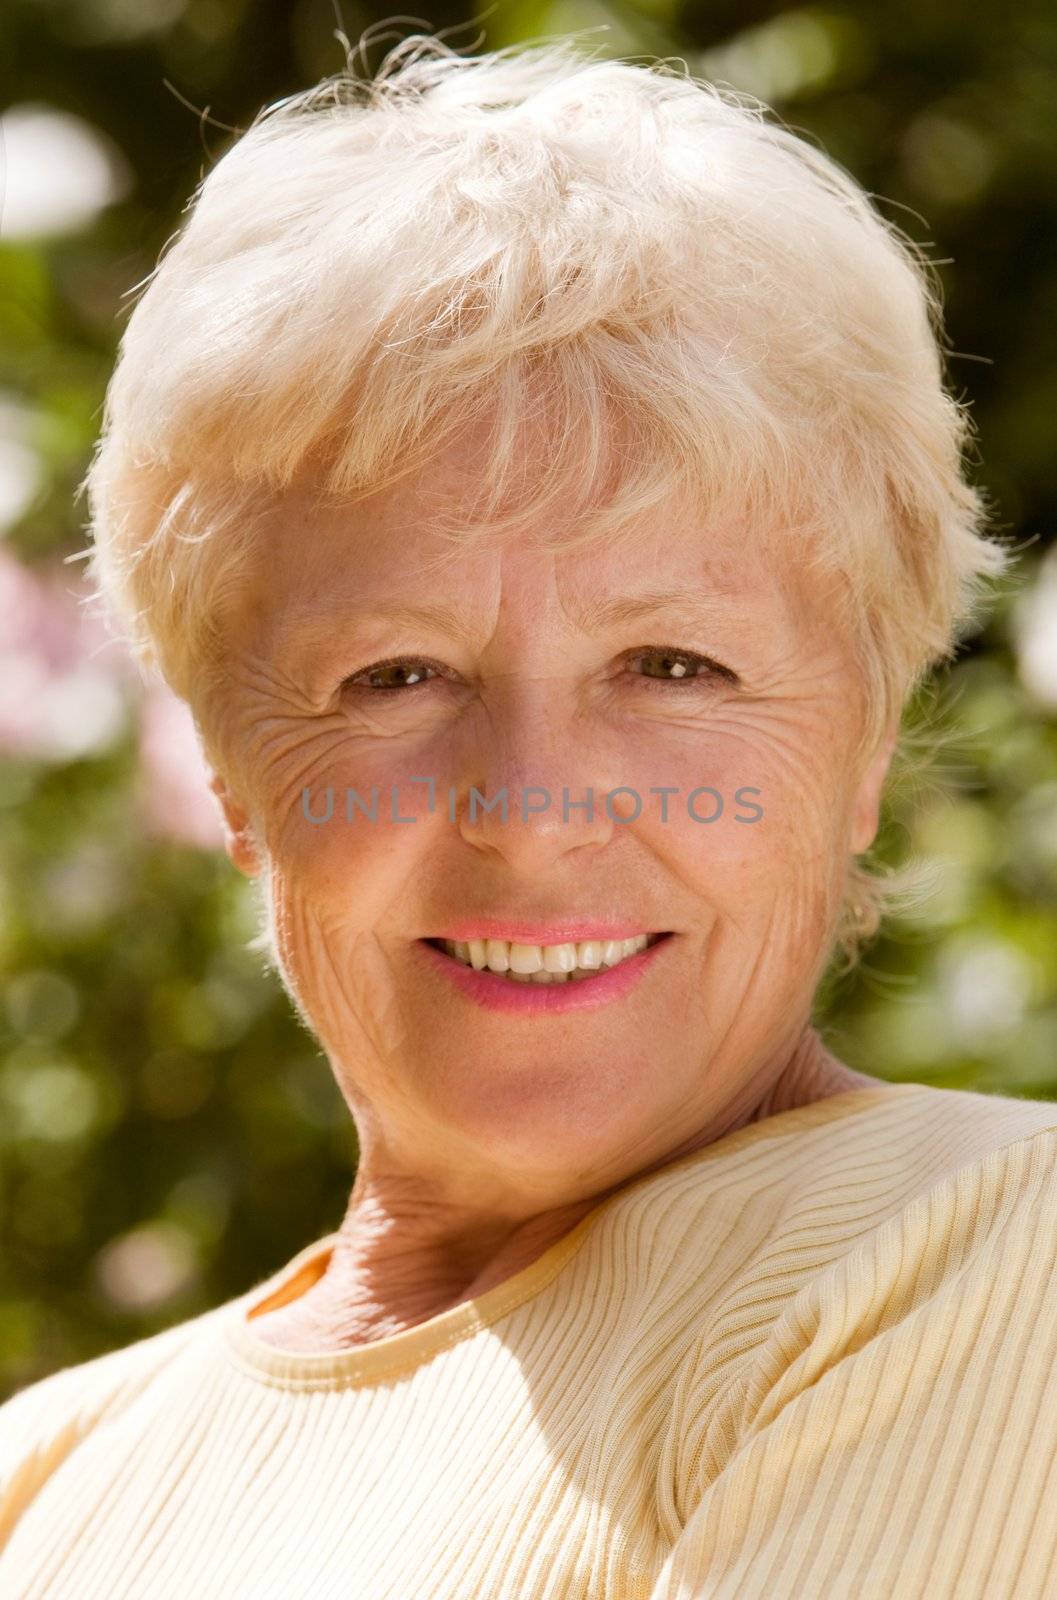 The elderly woman smiles
